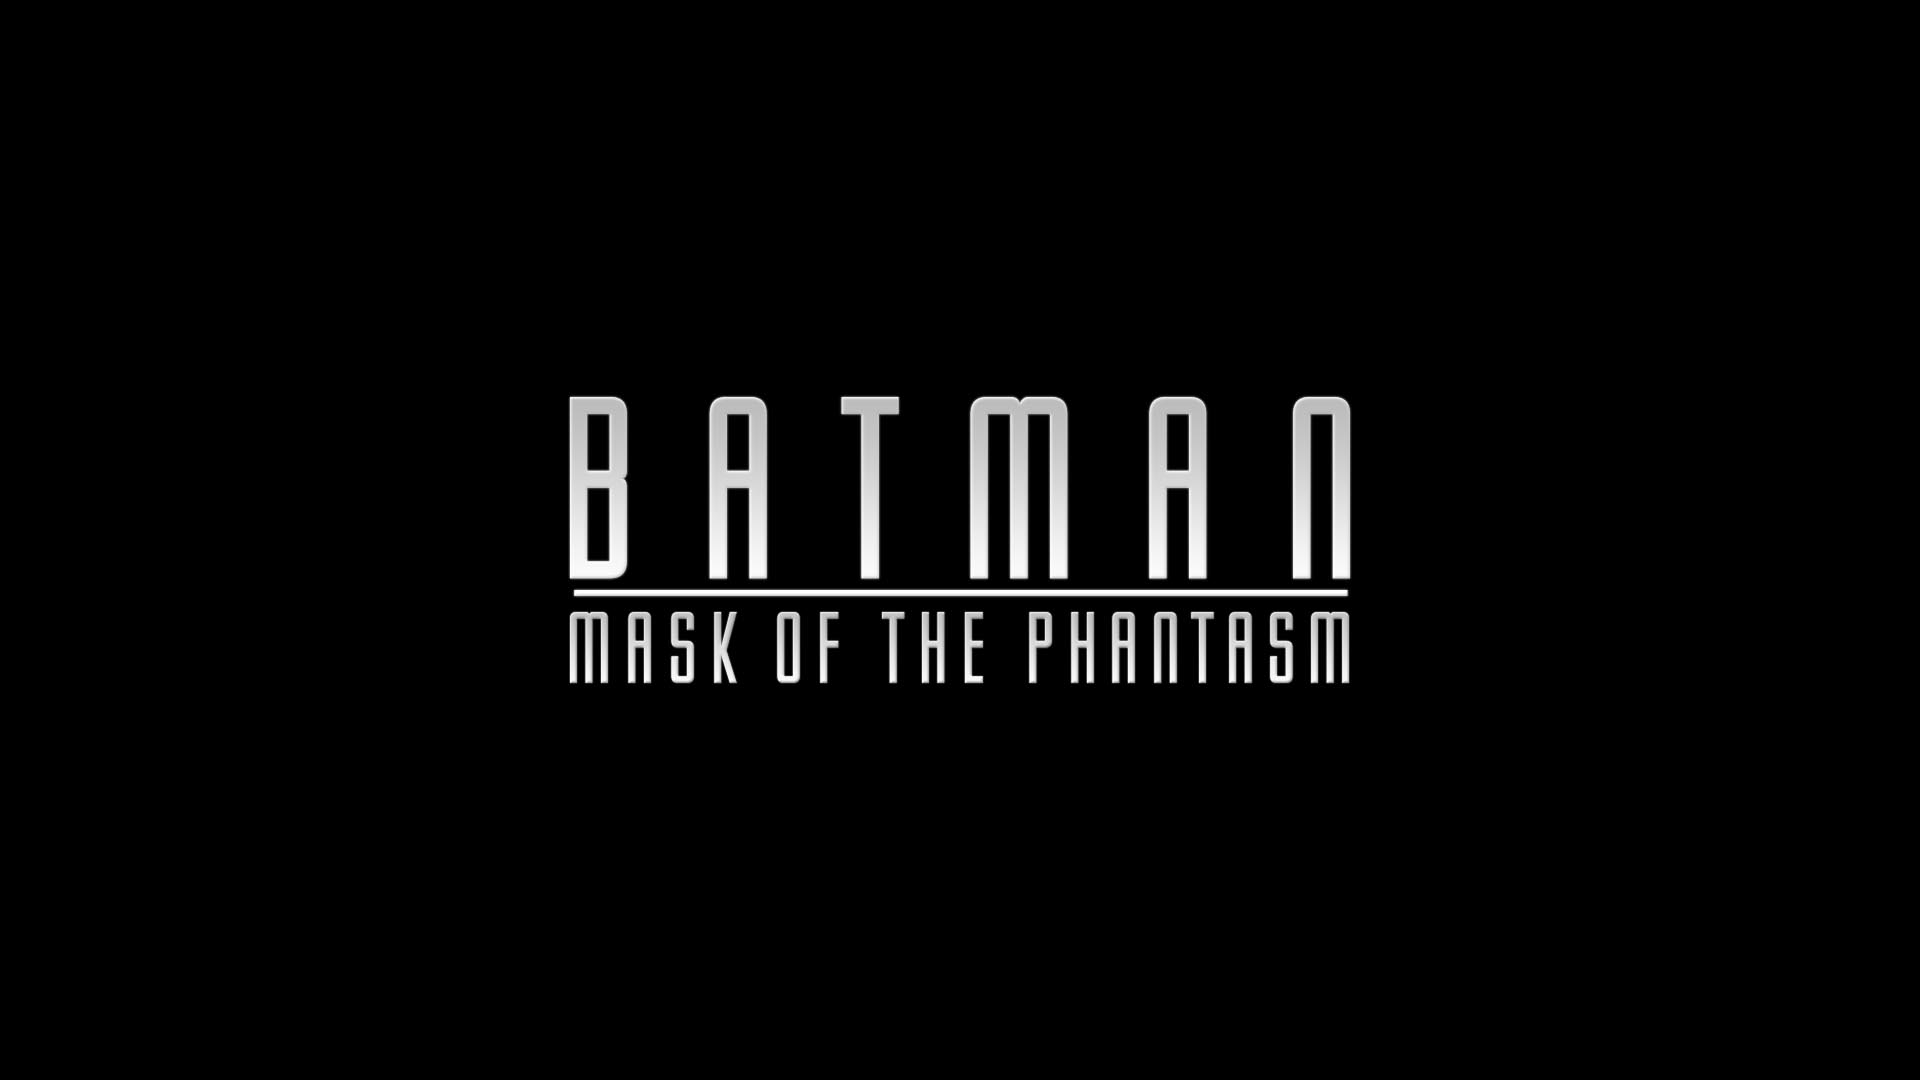 338155 скачать картинку кино, бэтмен: маска фантазма, бэтмен - обои и заставки бесплатно